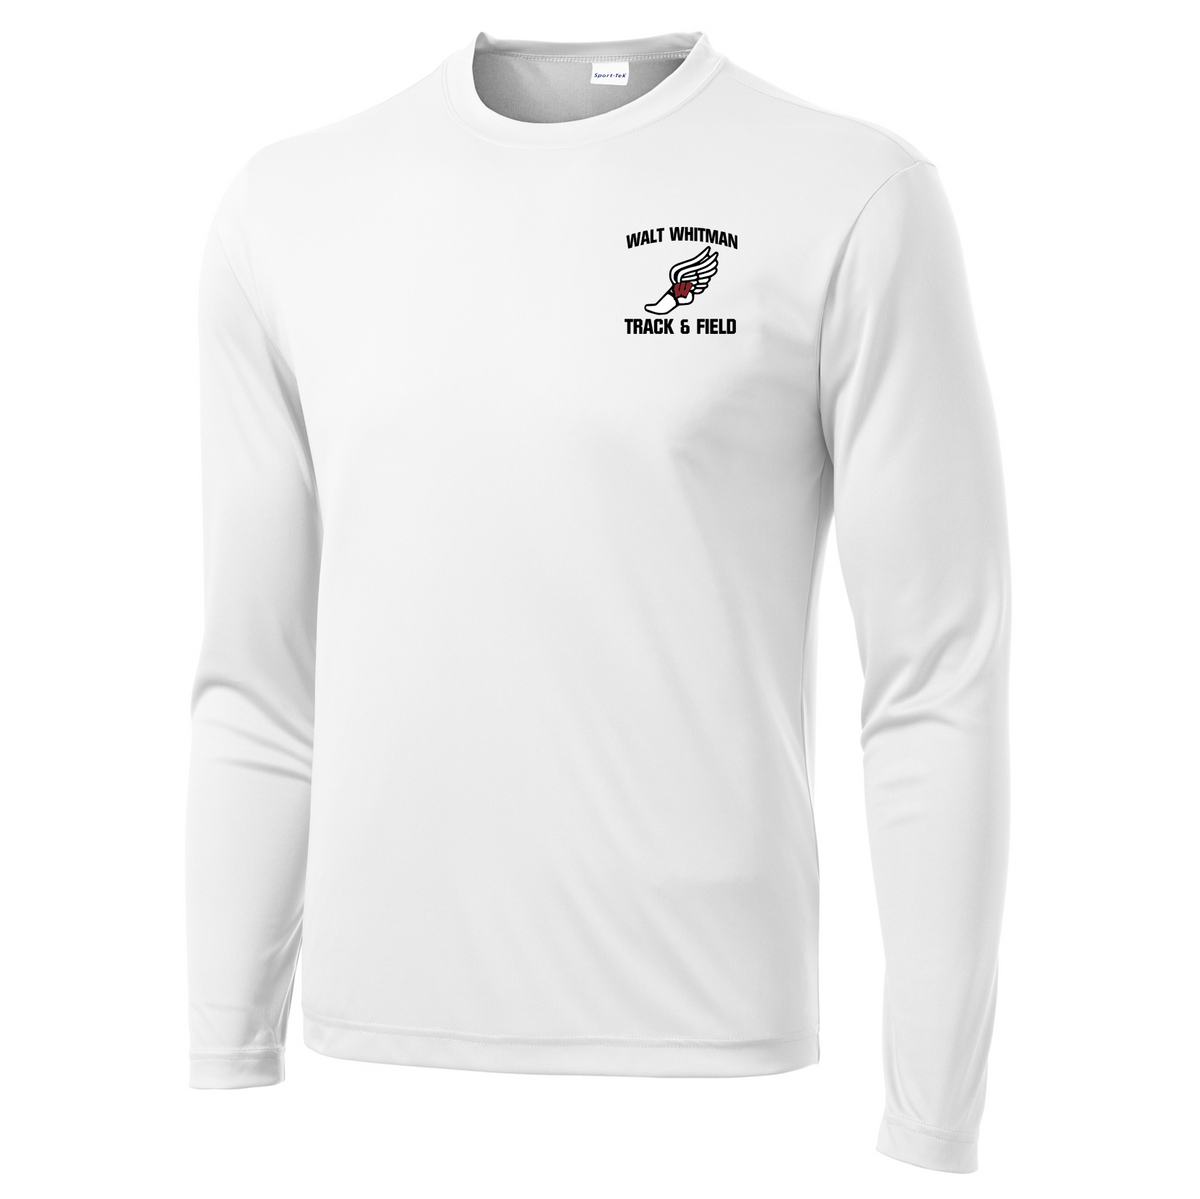 Whitman Track & Field Long Sleeve Performance Shirt